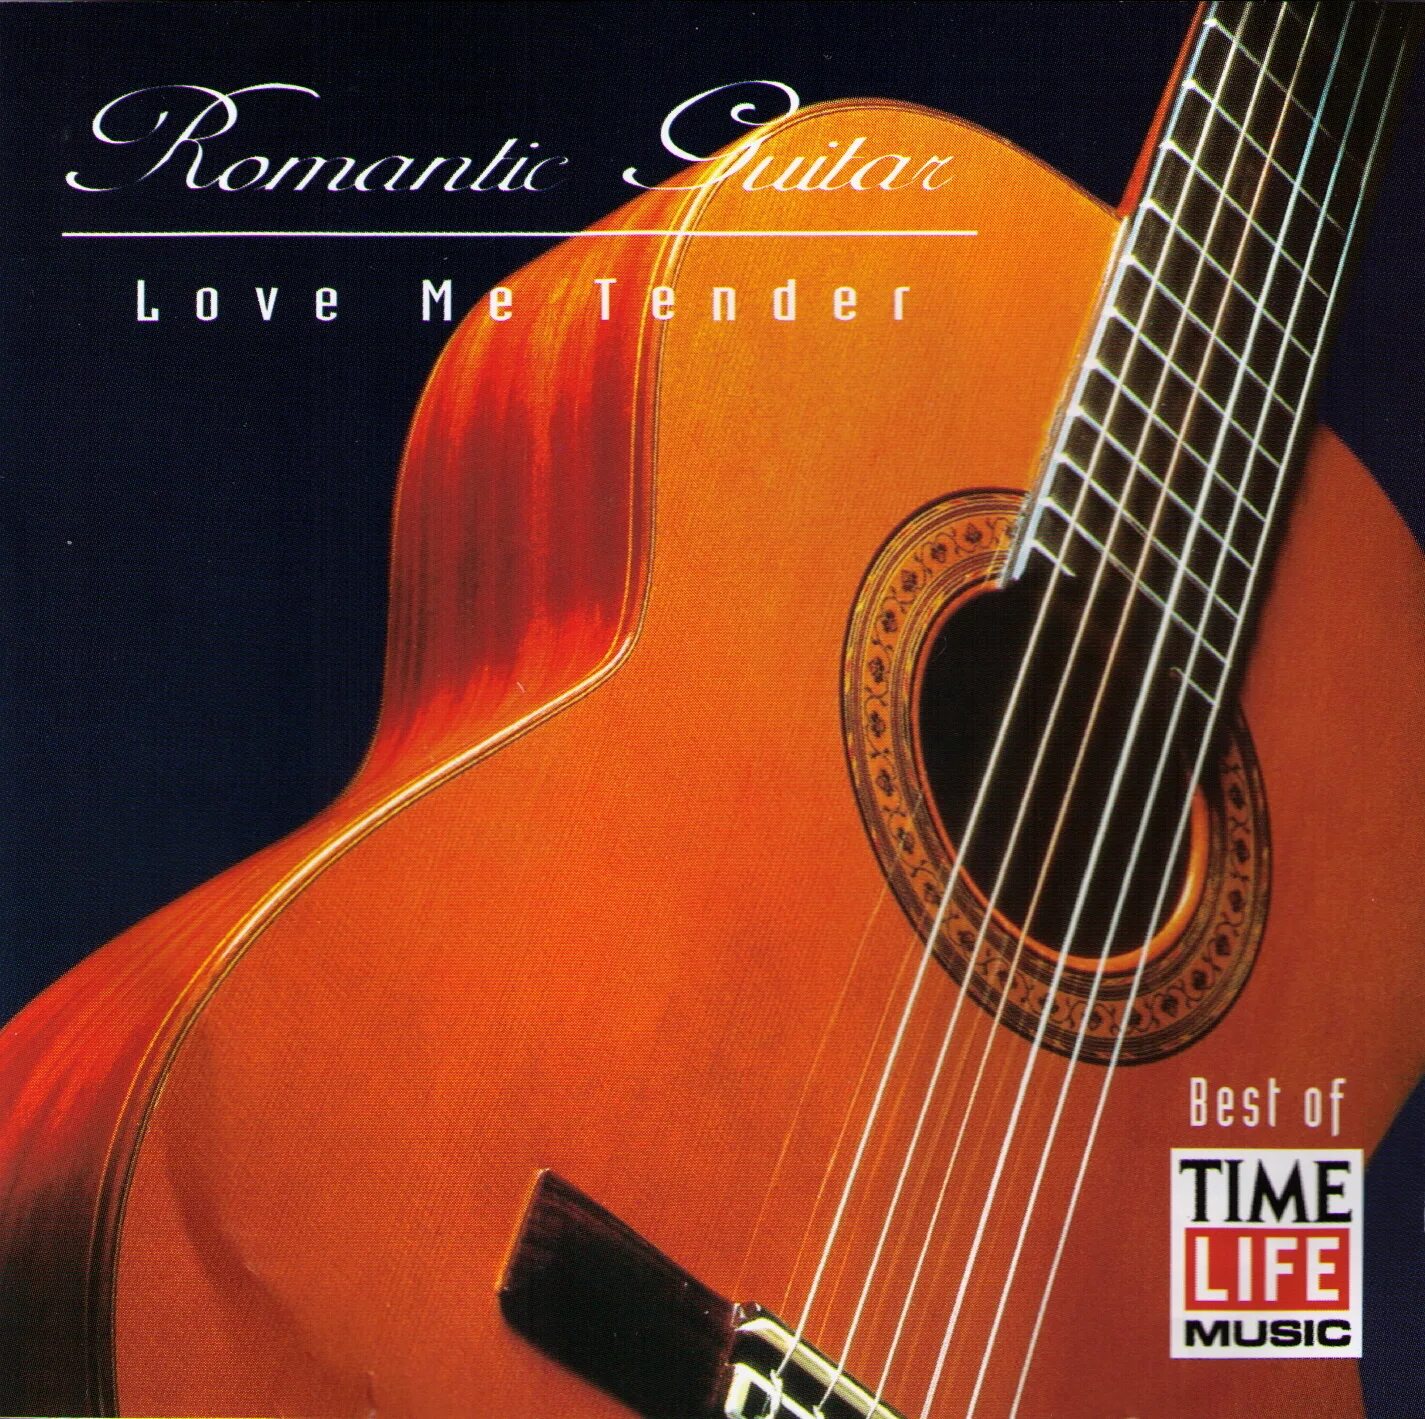 Акустическая гитара 1996 год. Гитара романтика. Гитара Love me. Романтическая гитара фото.